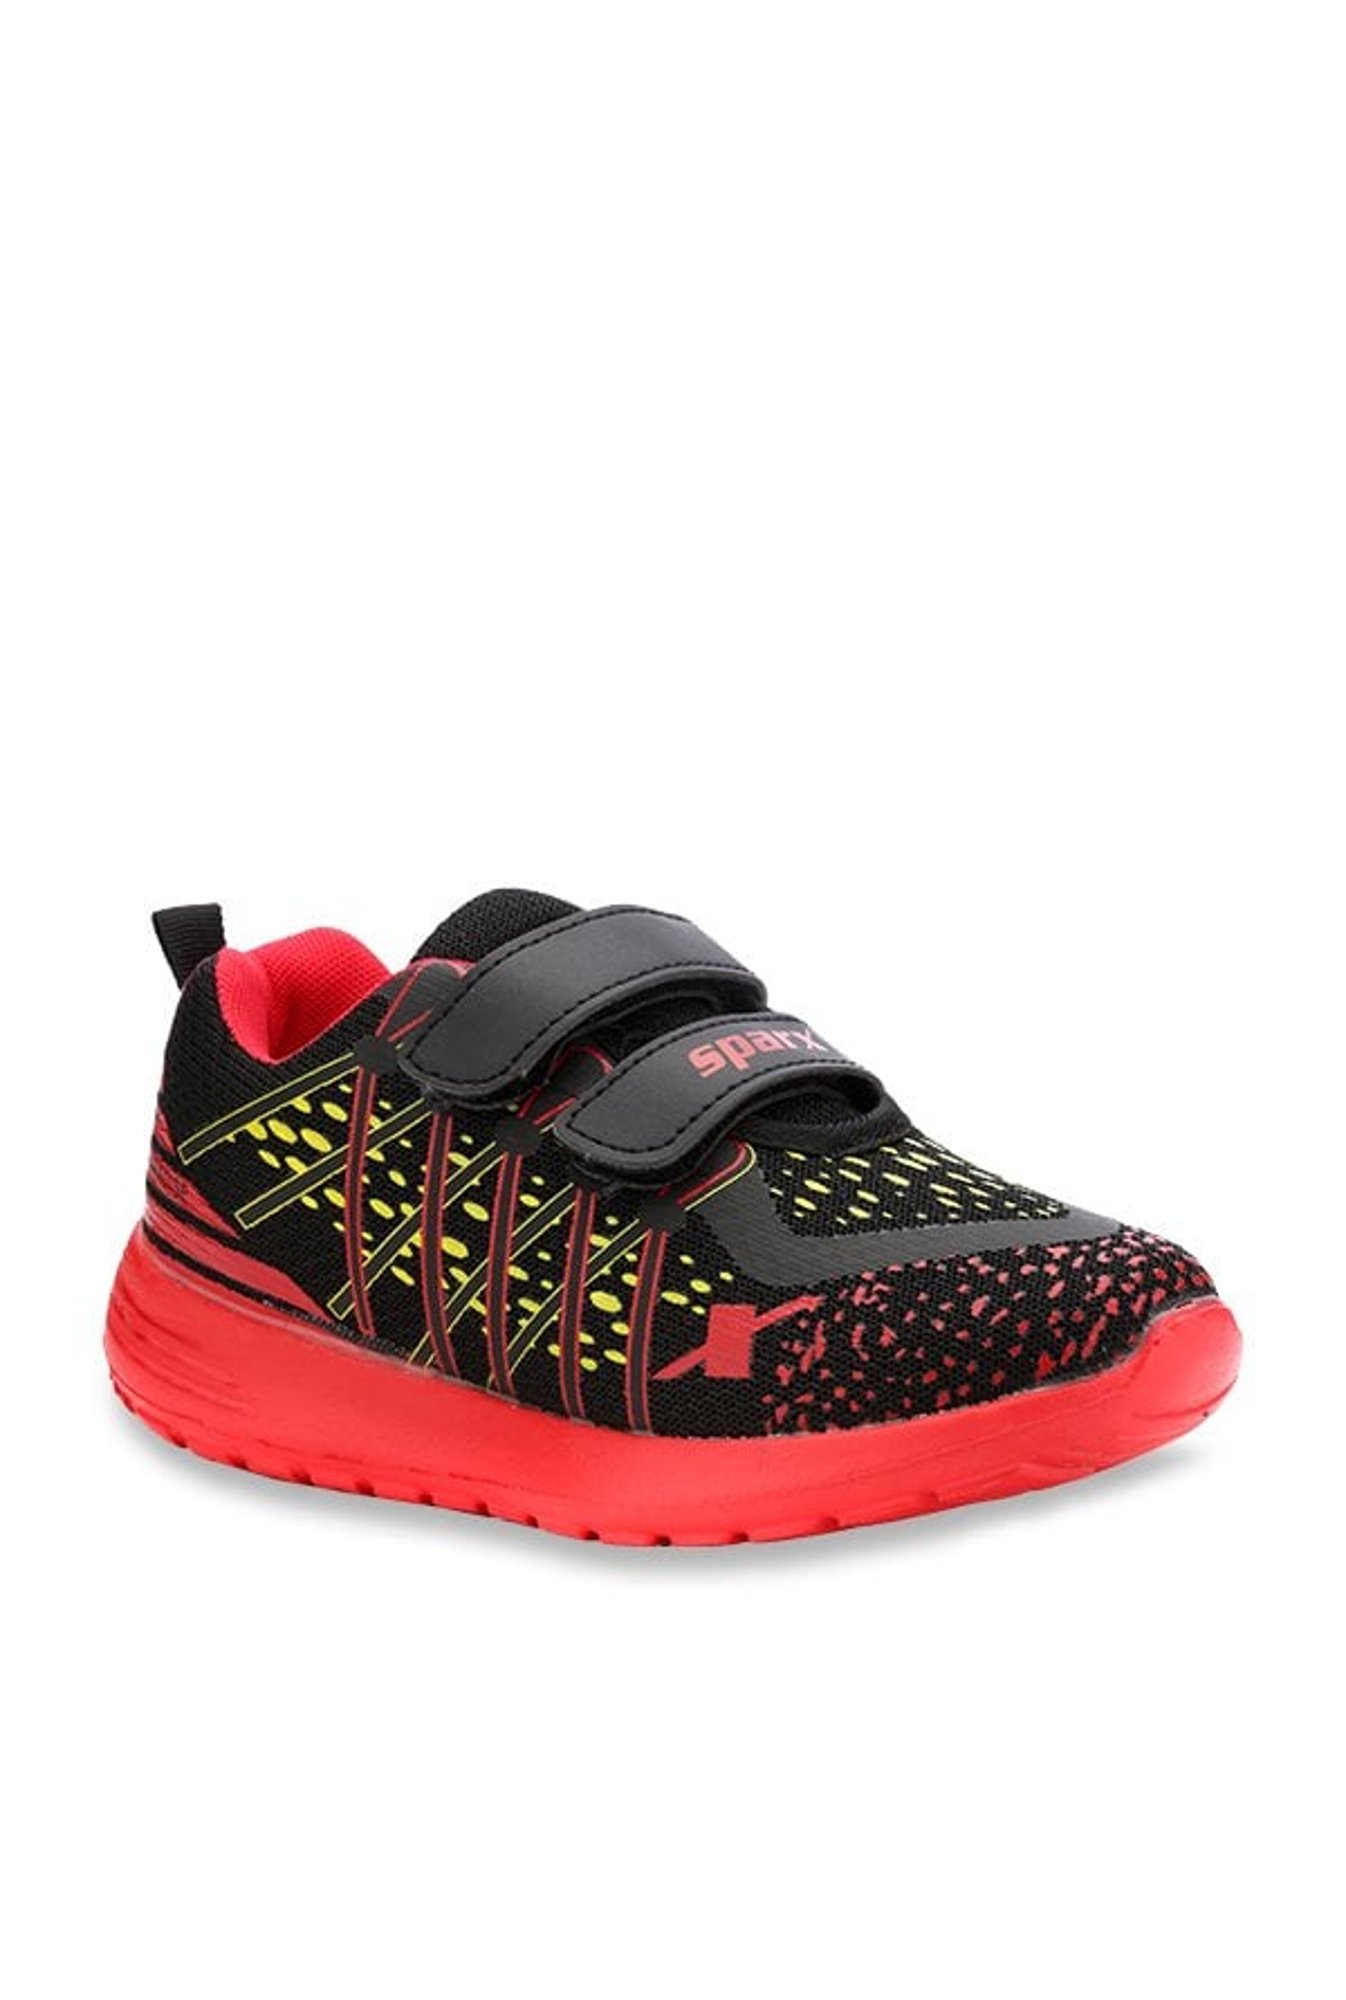 Sparx Kids Black \u0026 Red Velcro Shoes 